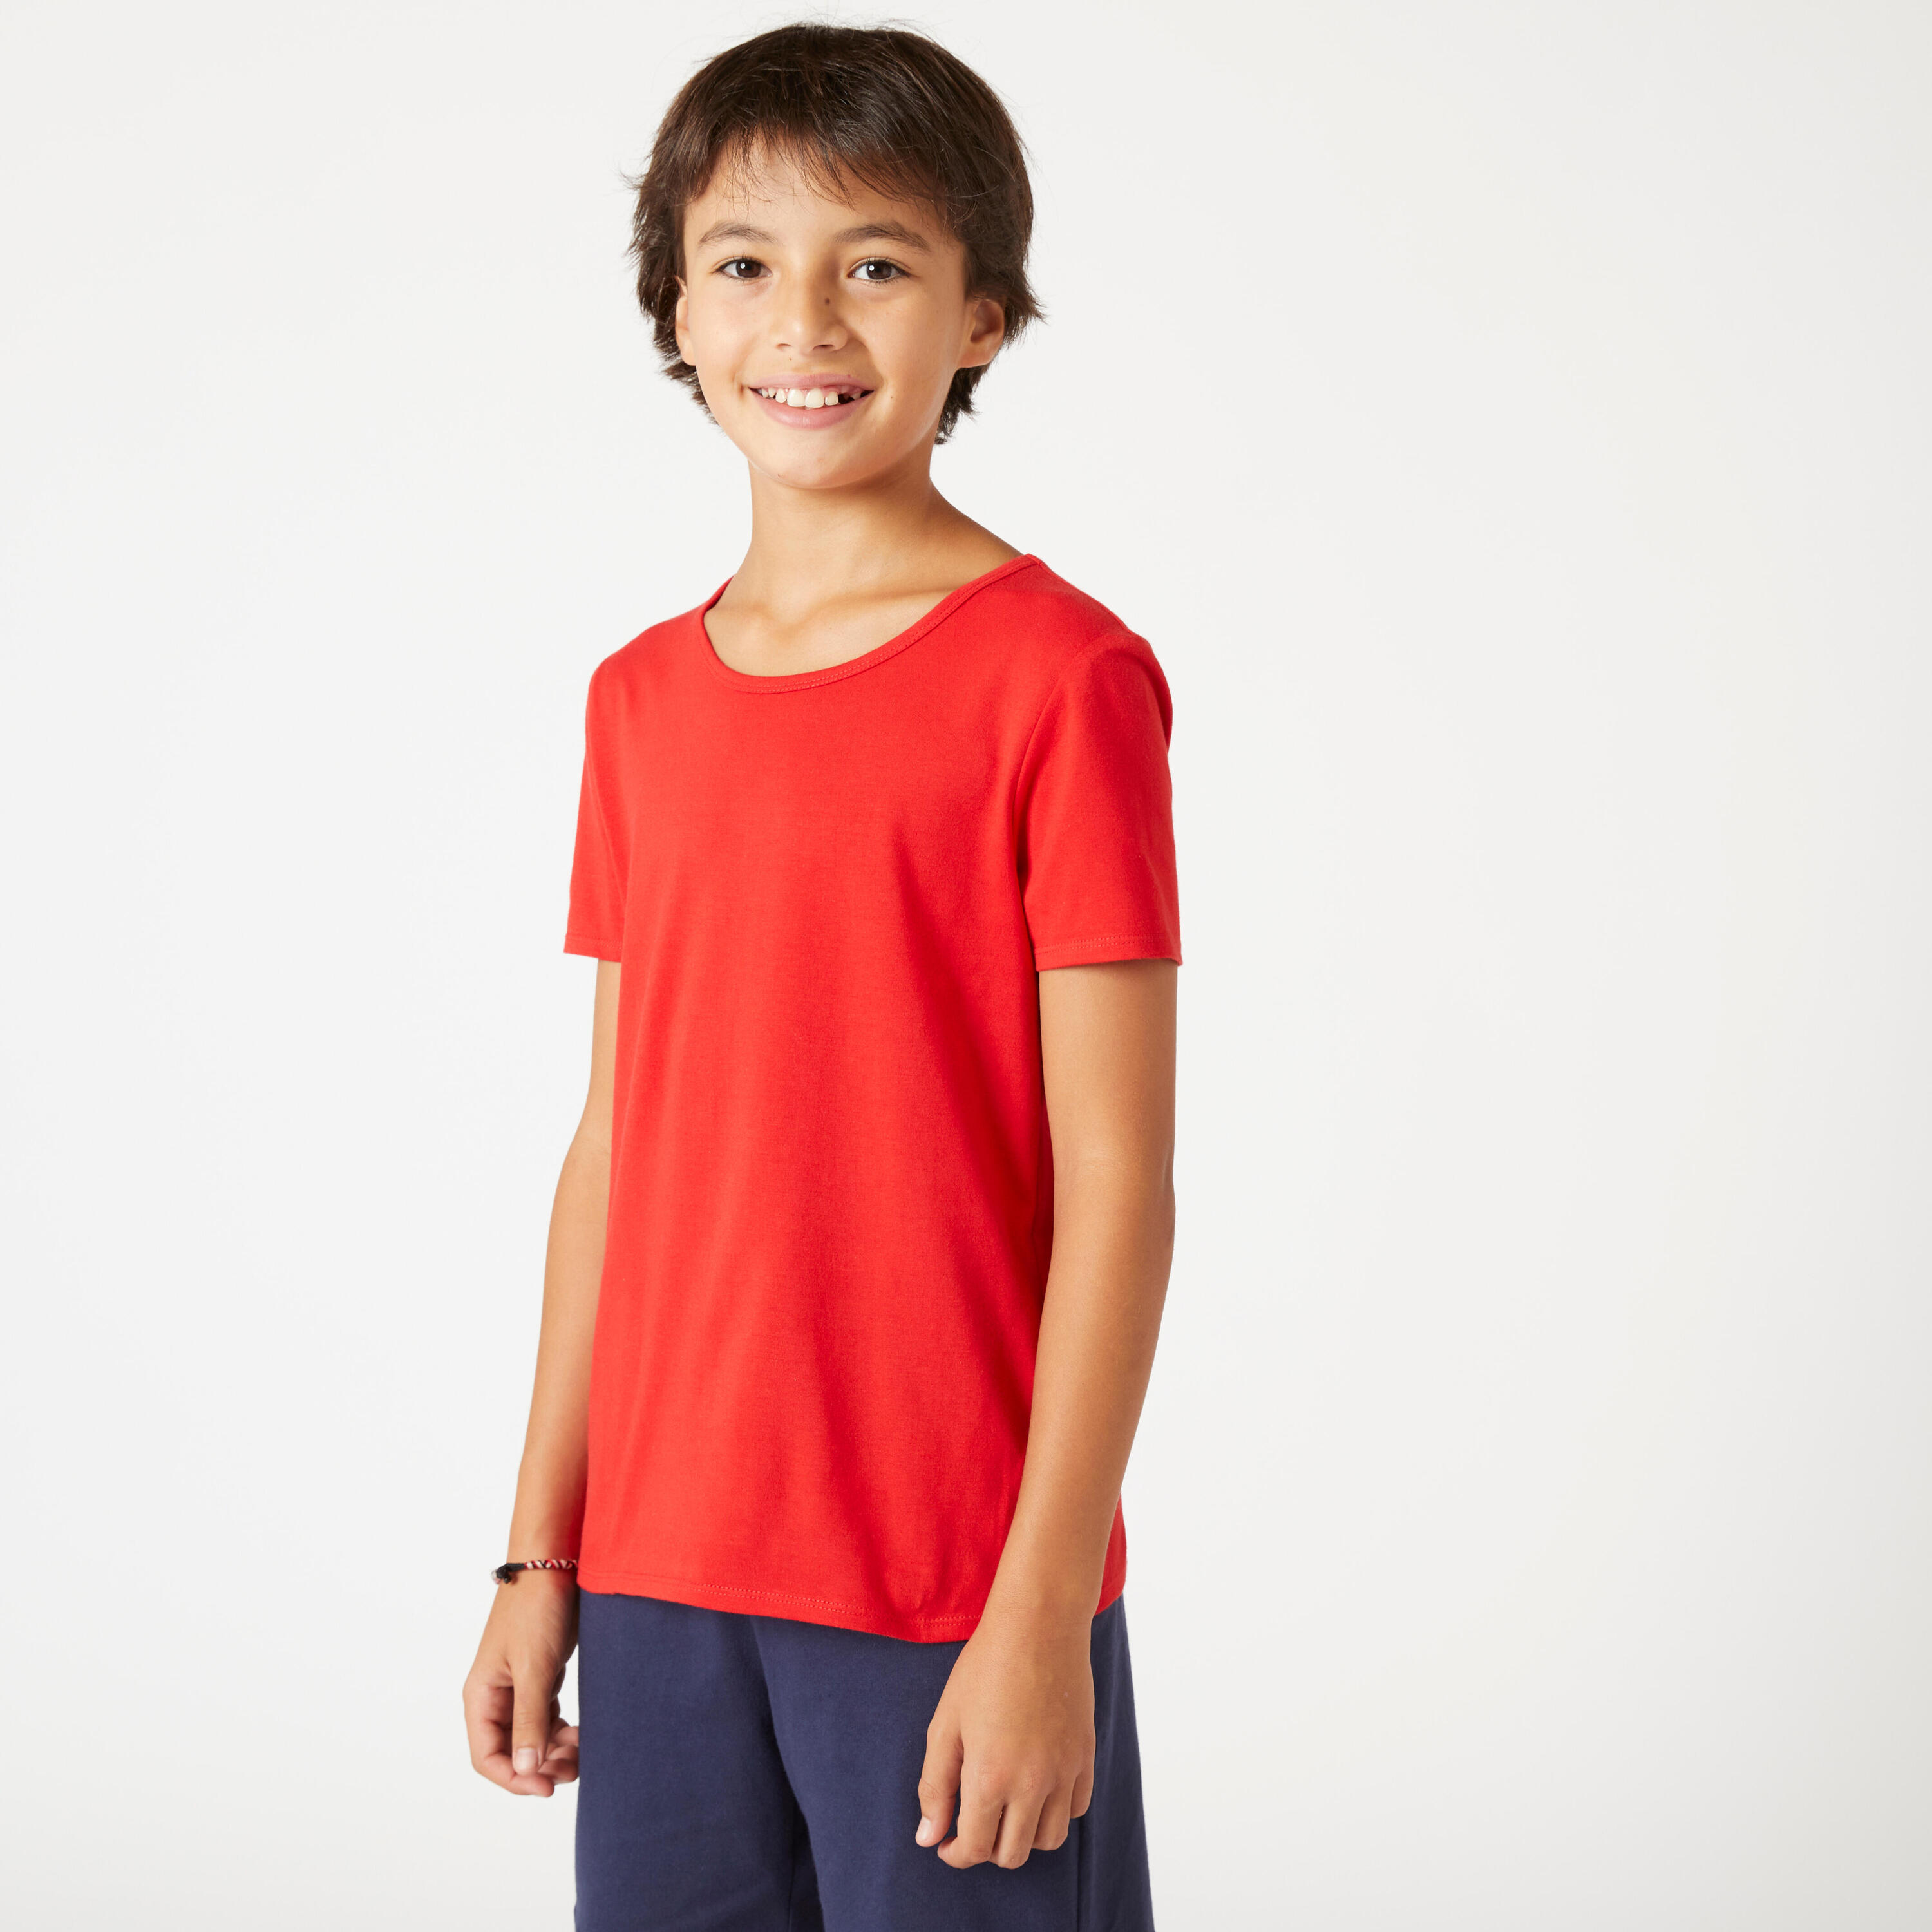 DOMYOS Kids' Basic Cotton T-Shirt - Red